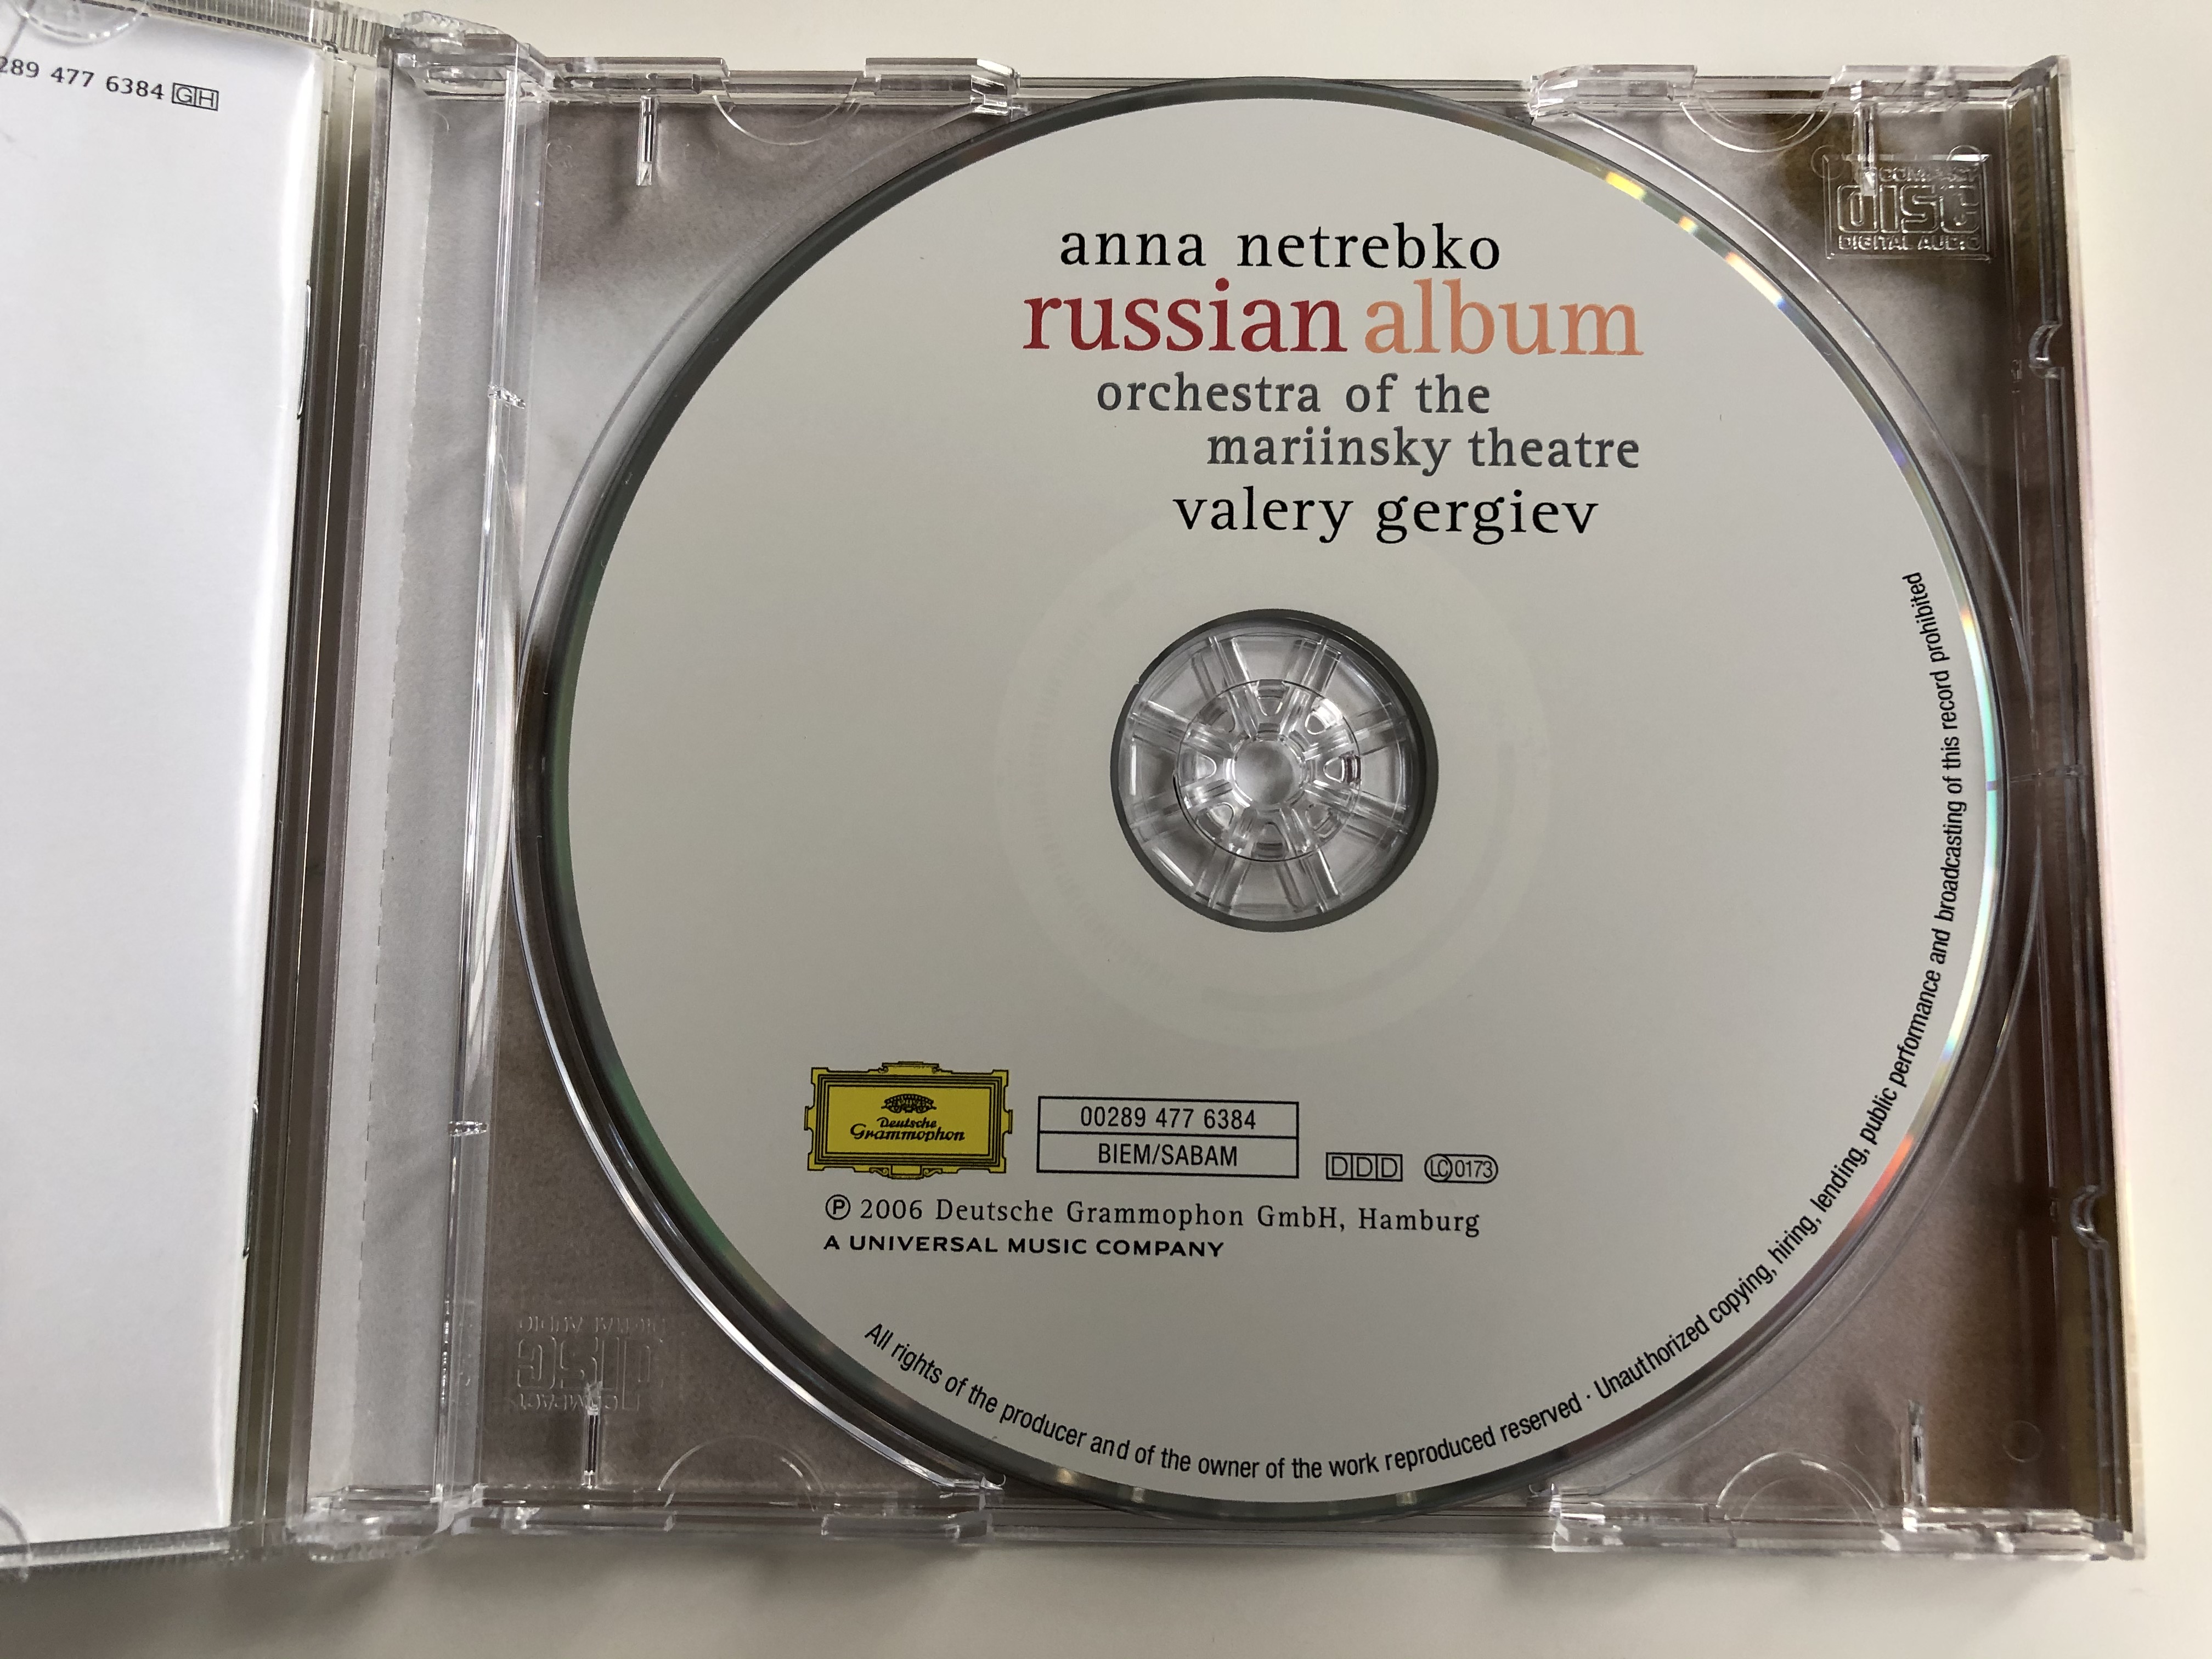 anna-netrebko-russian-album-orchestra-of-the-mariinsky-theatre-valery-gergiev-deutsche-grammophon-audio-cd-2006-00289-477-6384-2-.jpg